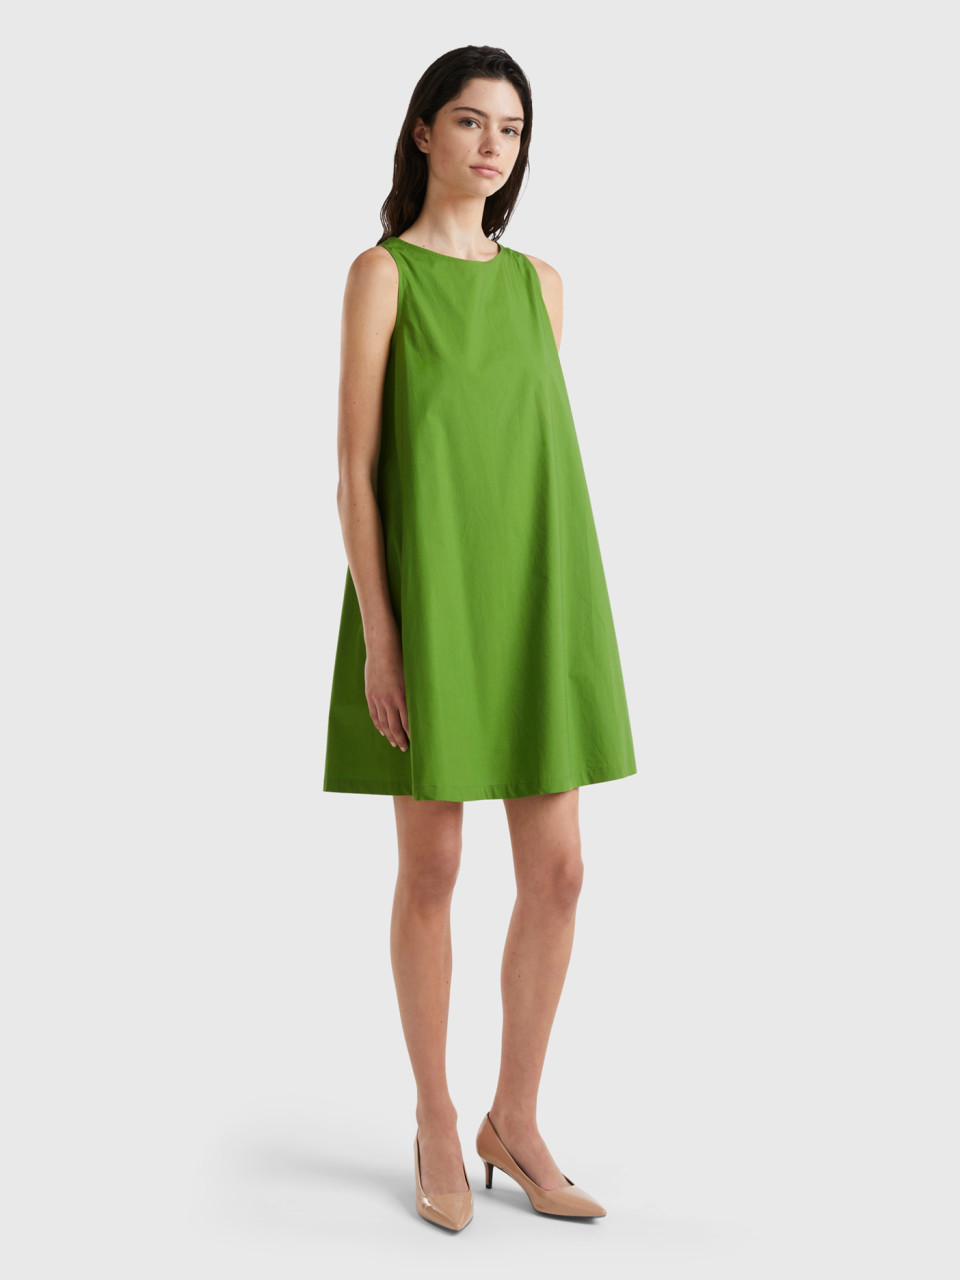 Benetton, Sleeveless Trapeze Dress, Military Green, Women